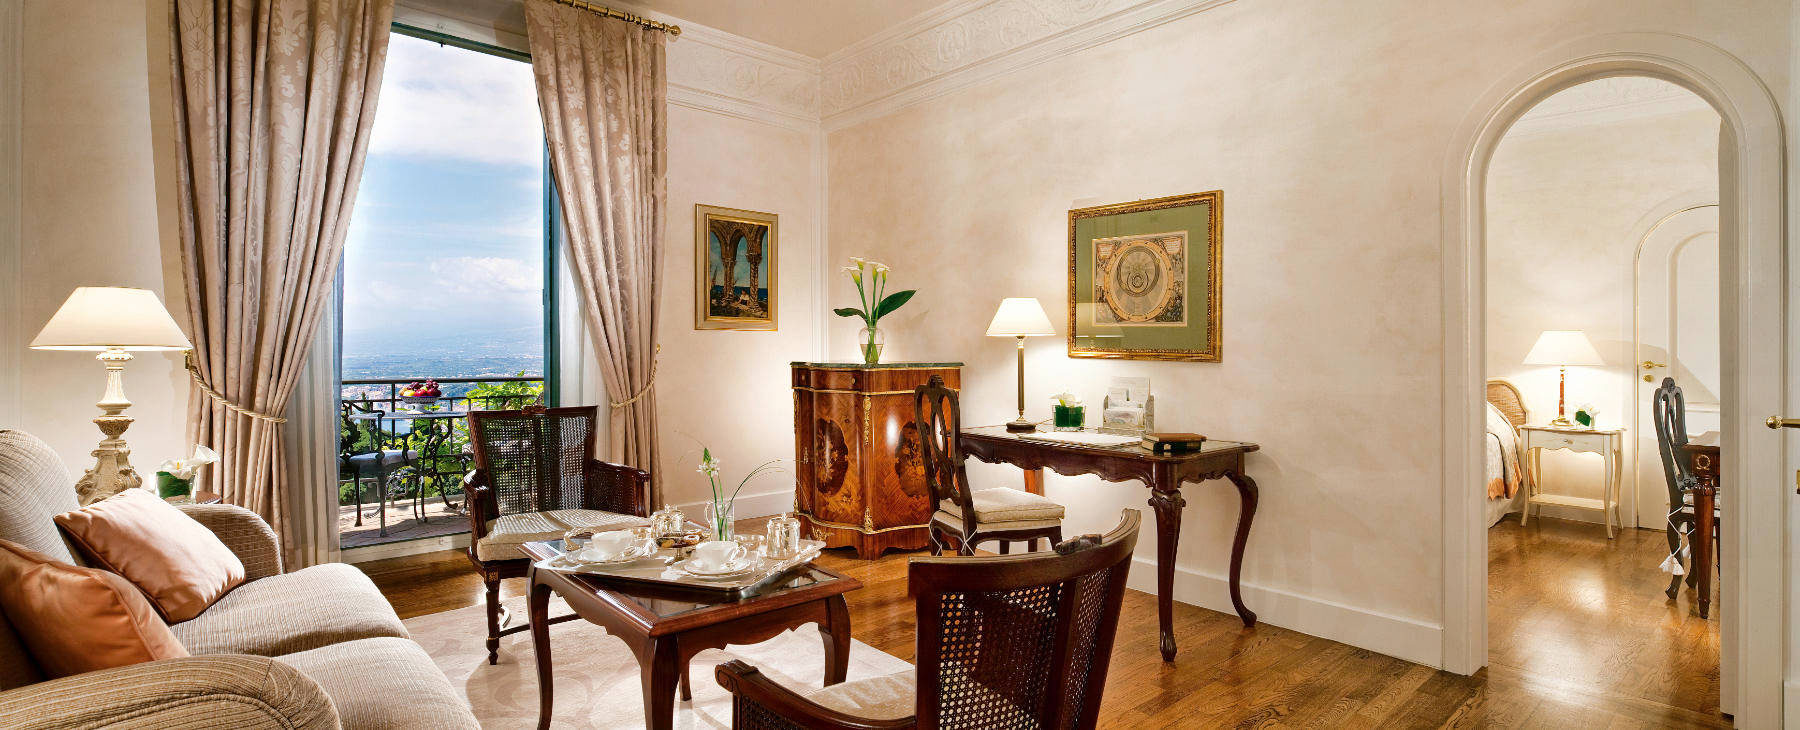 Luxushotel Belmond Grand Hotel Timeo Taormina Sizilien Italien